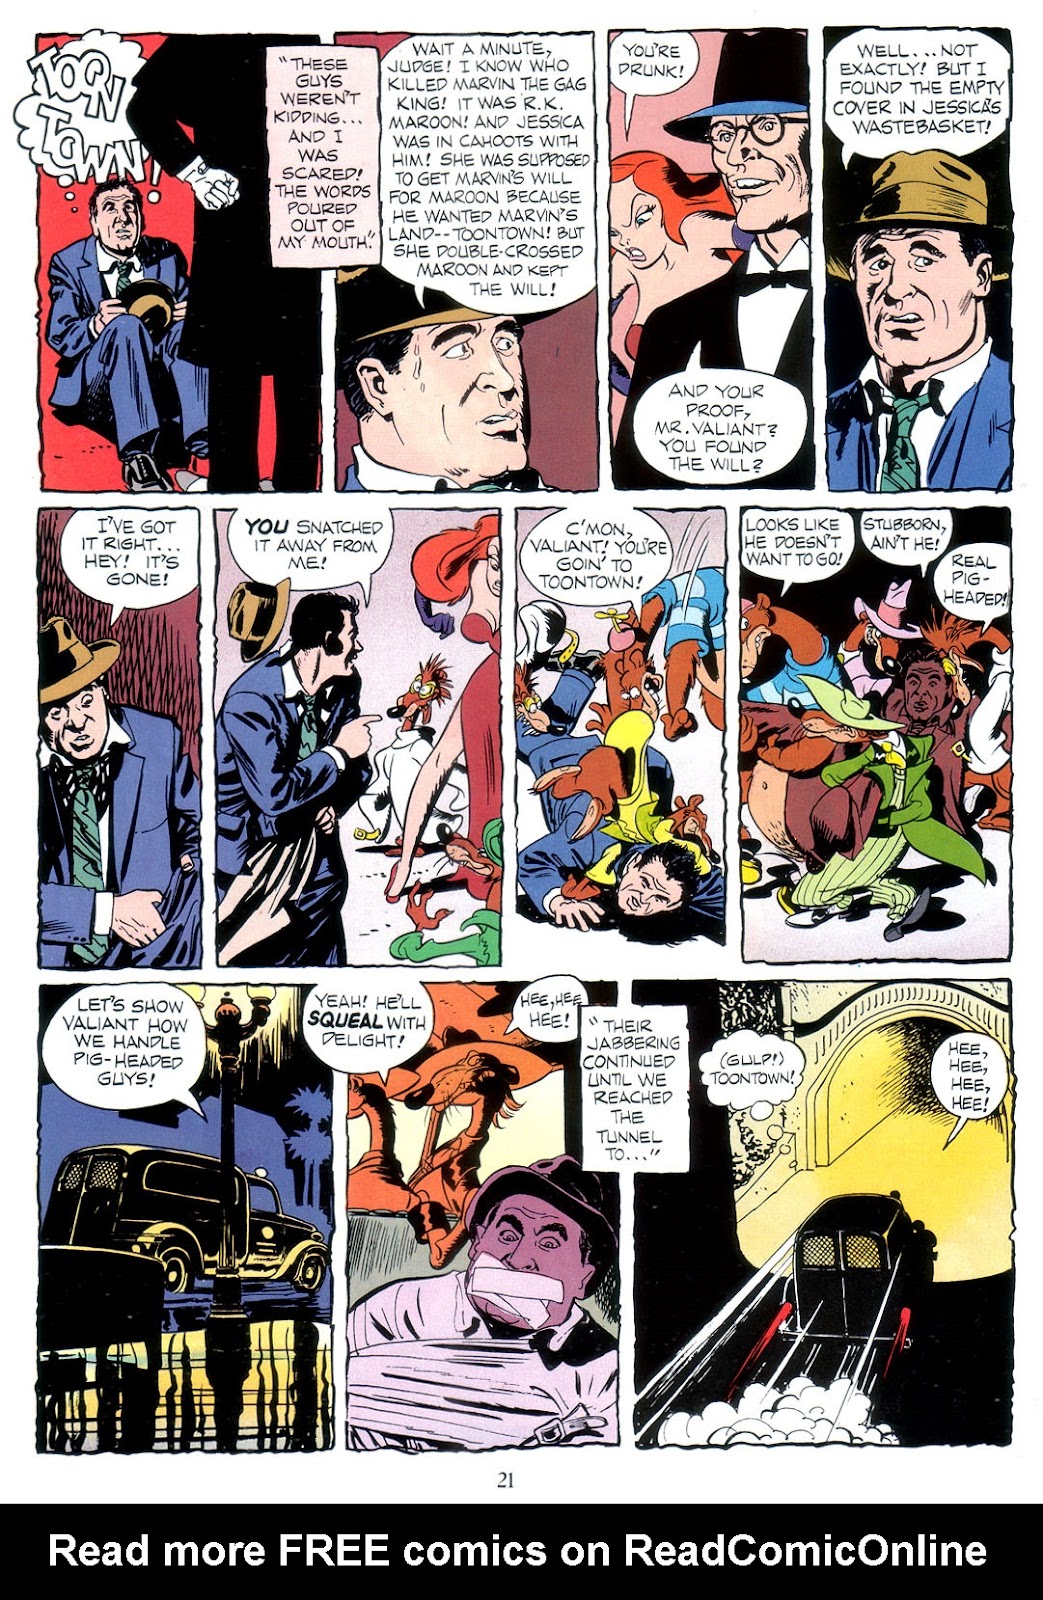 Marvel Graphic Novel issue 41 - Who Framed Roger Rabbit - Page 23